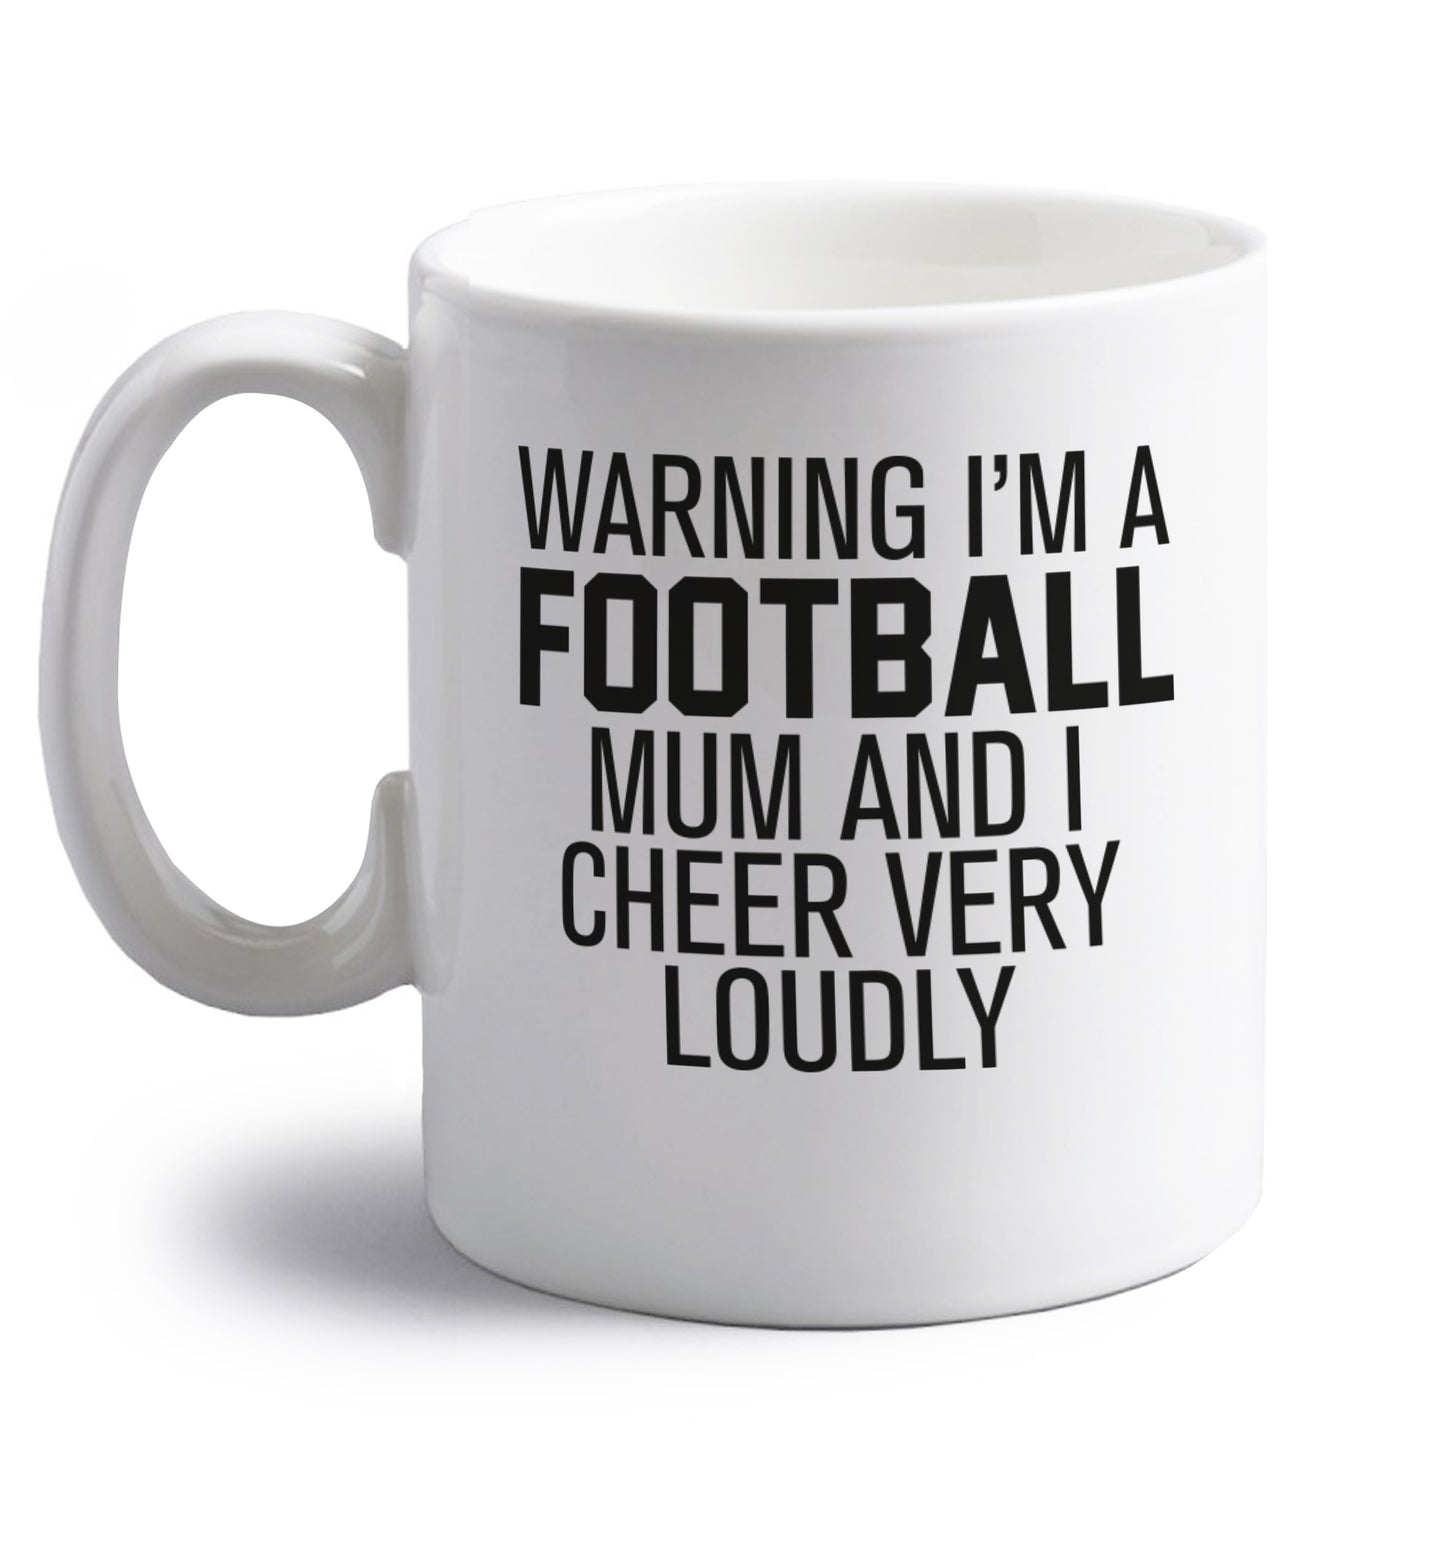 Warning I'm a football mum and I cheer very loudly right handed white ceramic mug 